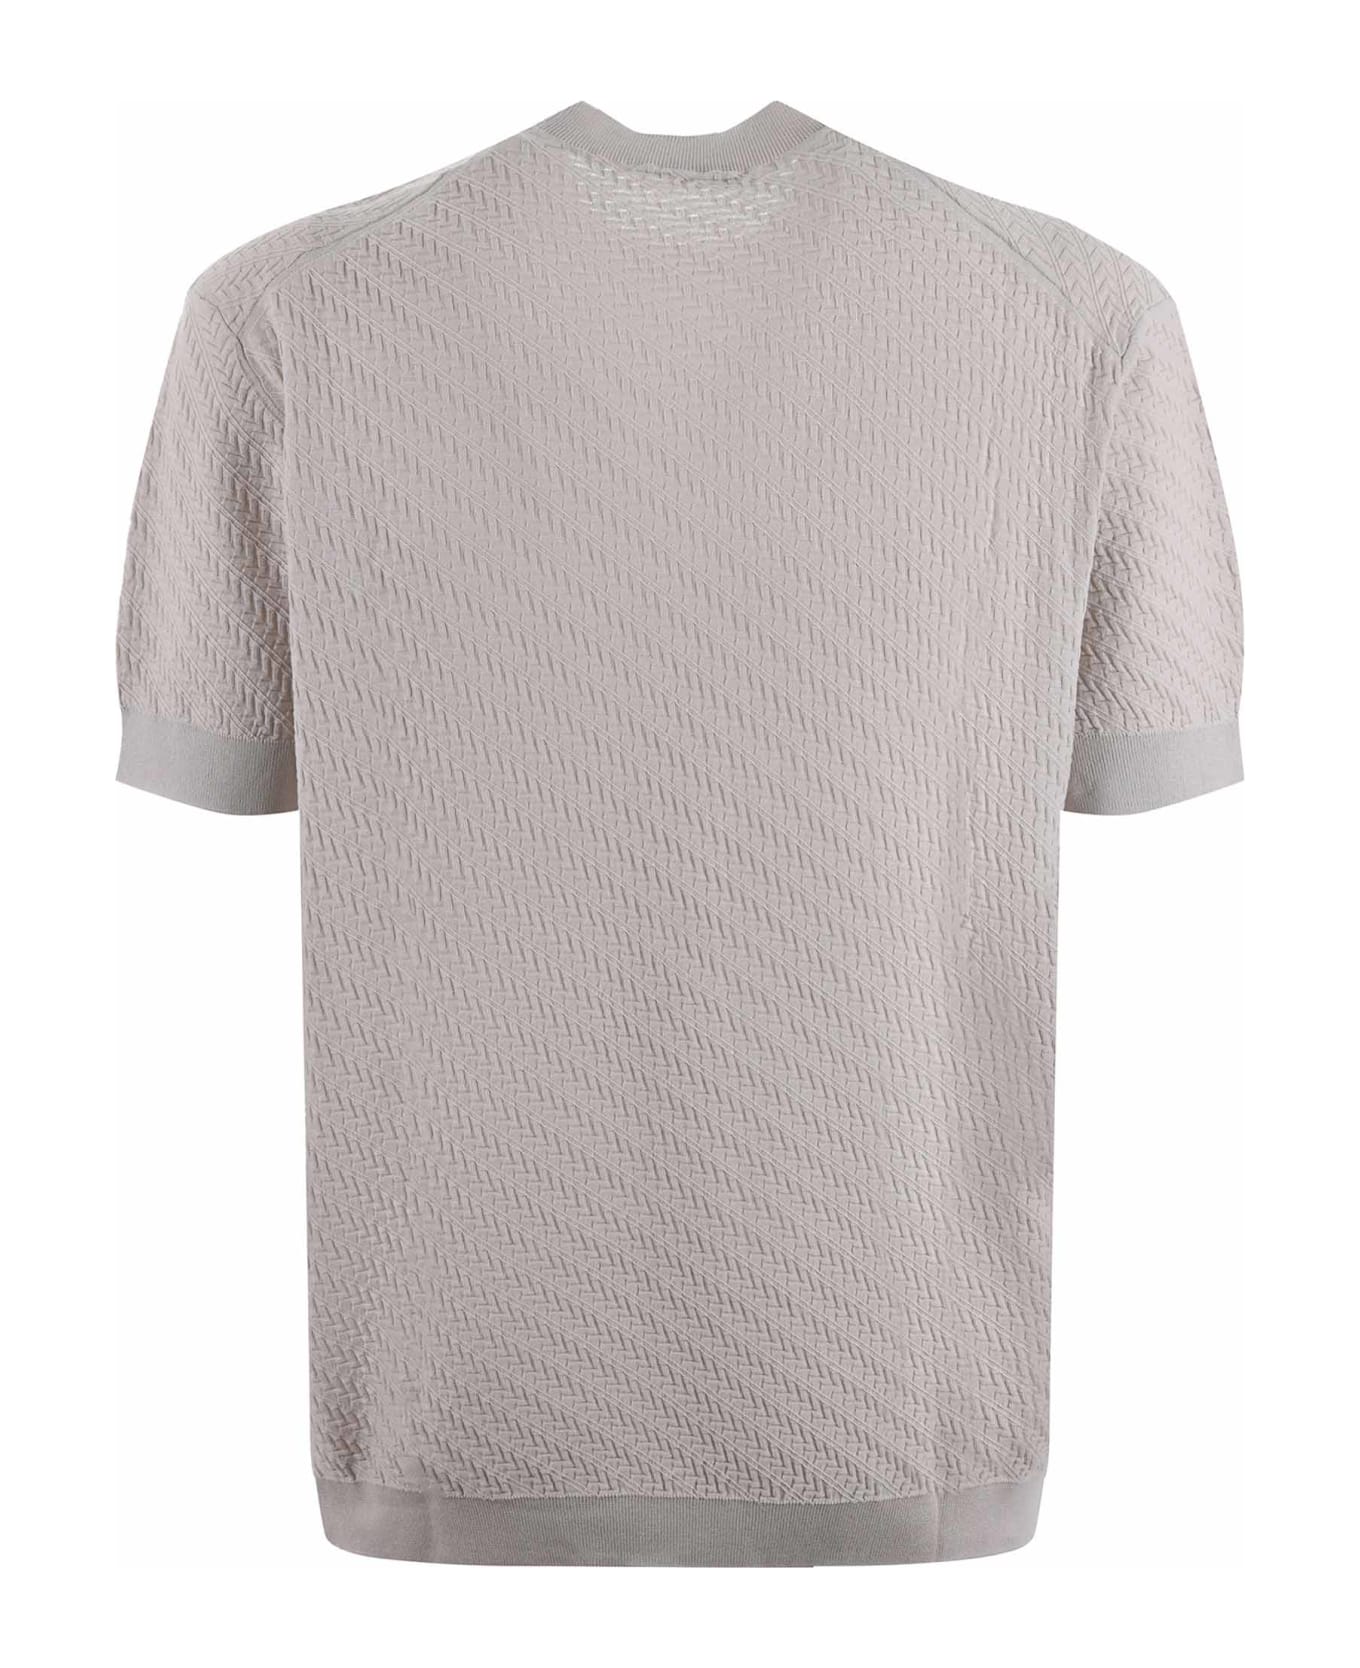 Paolo Pecora T-shirt In Light Cotton Thread - Beige chiaro